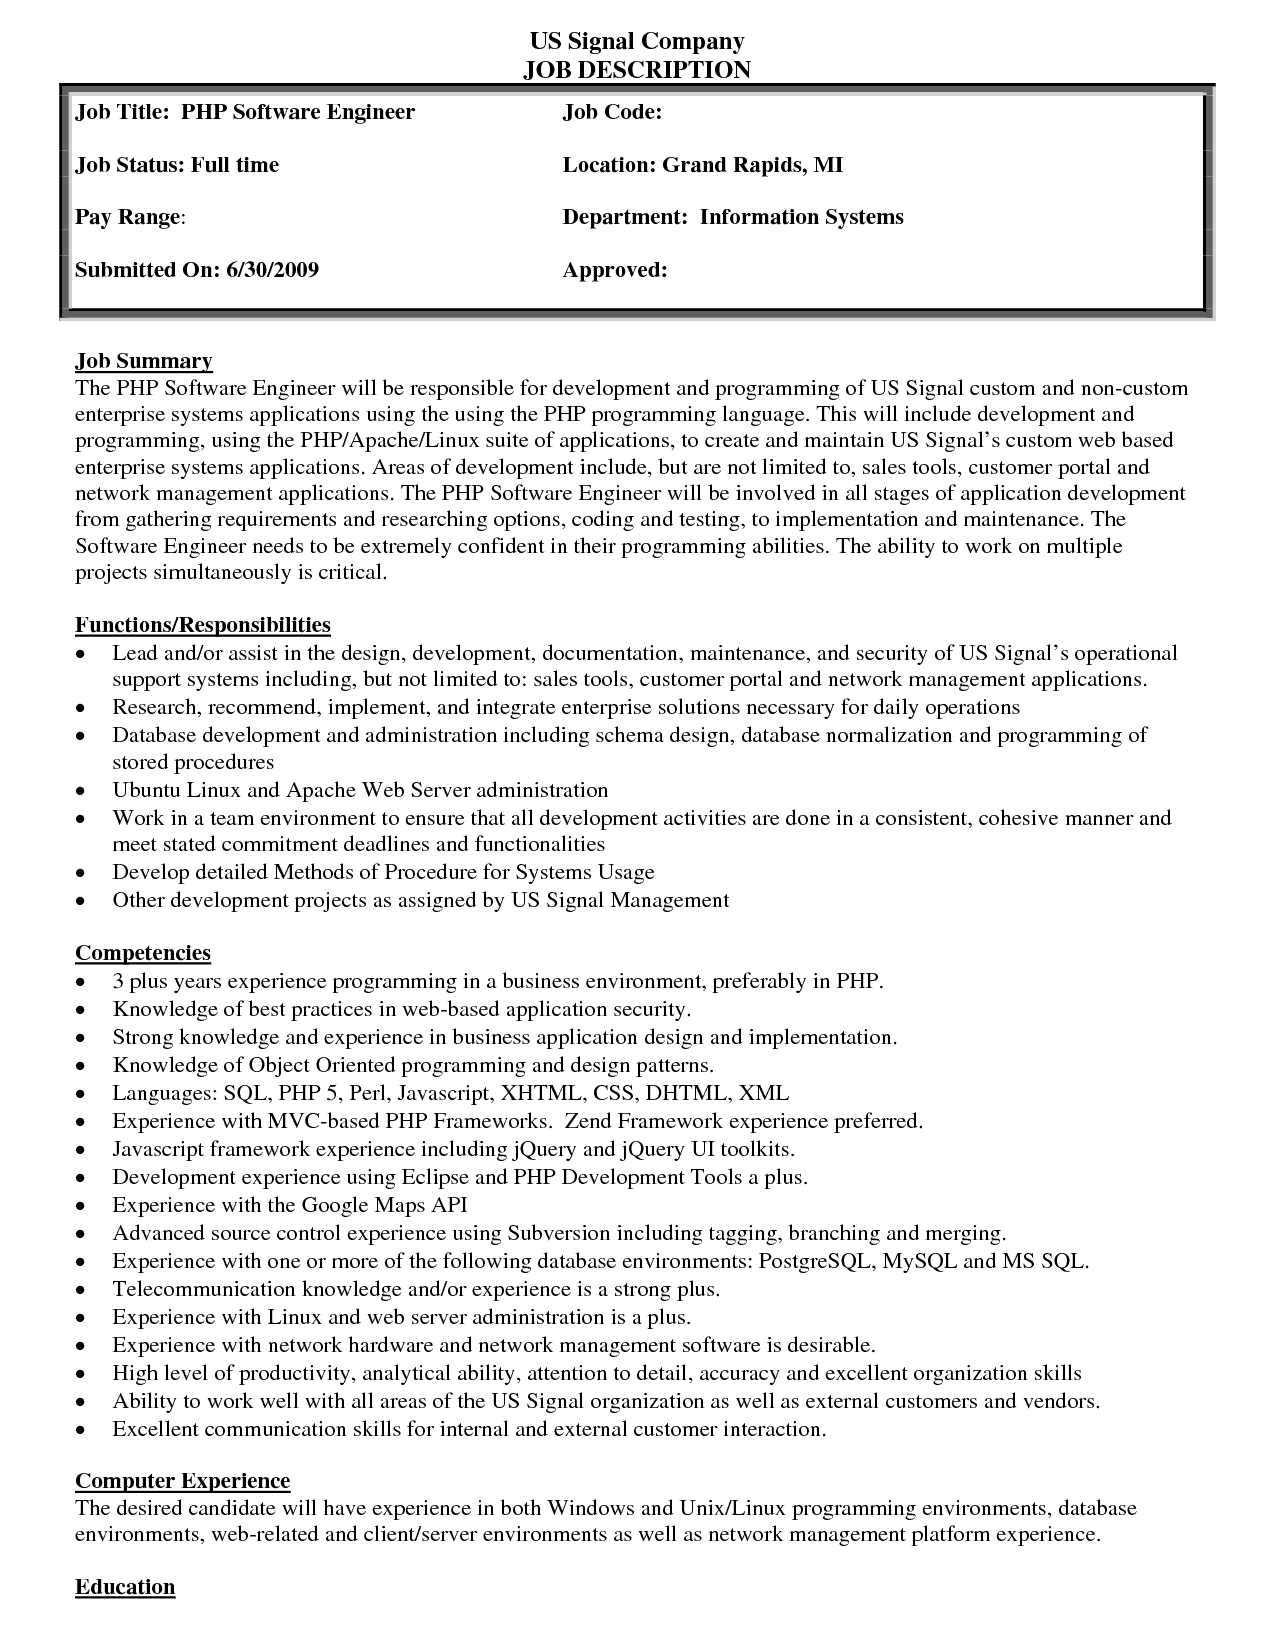 job description template for resume